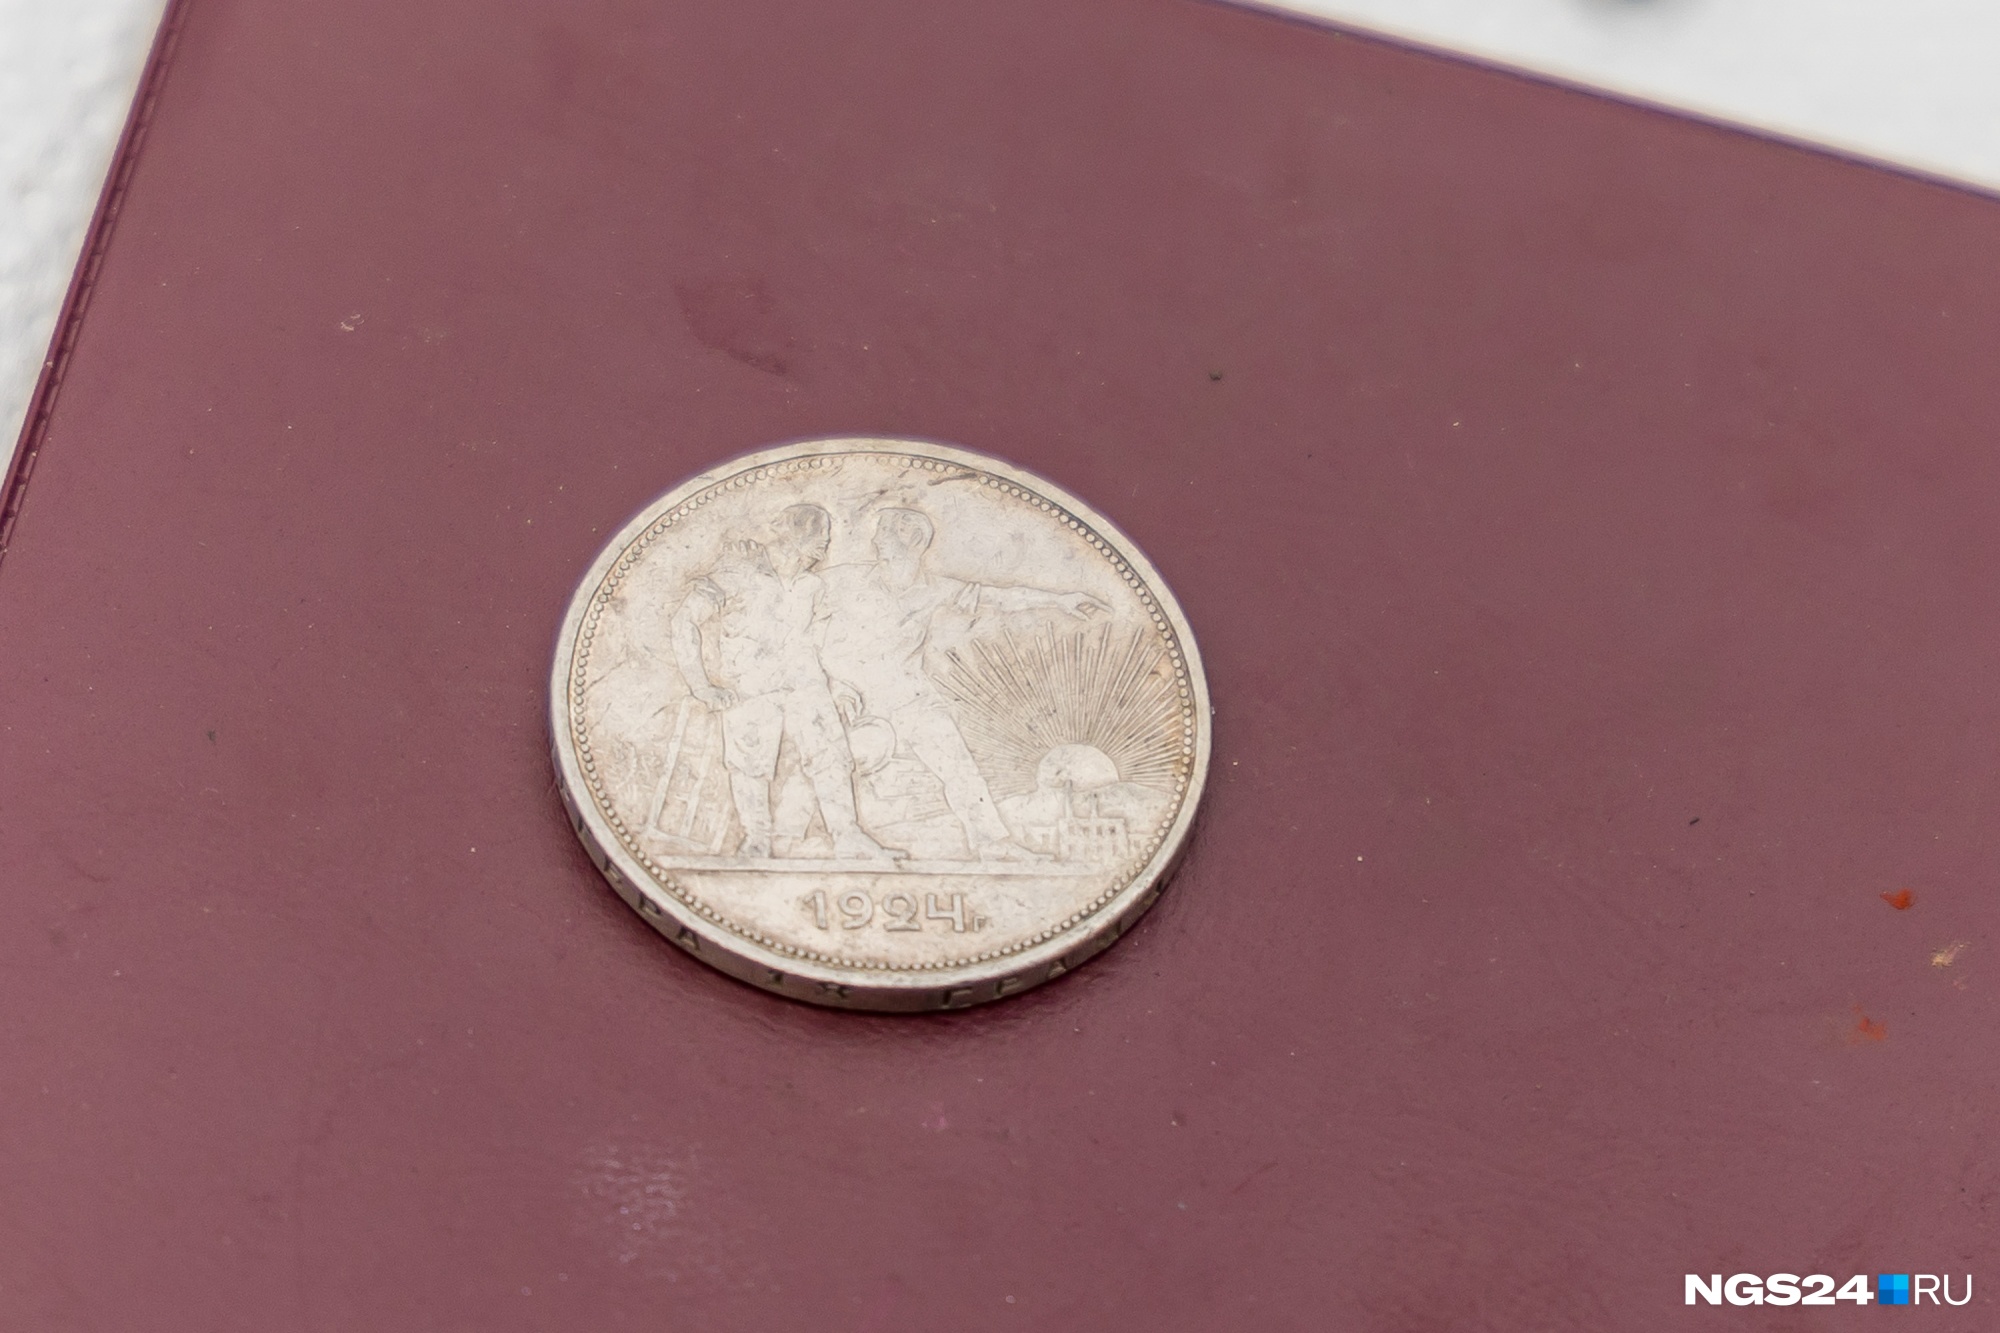 Монета датируется 1924 годом